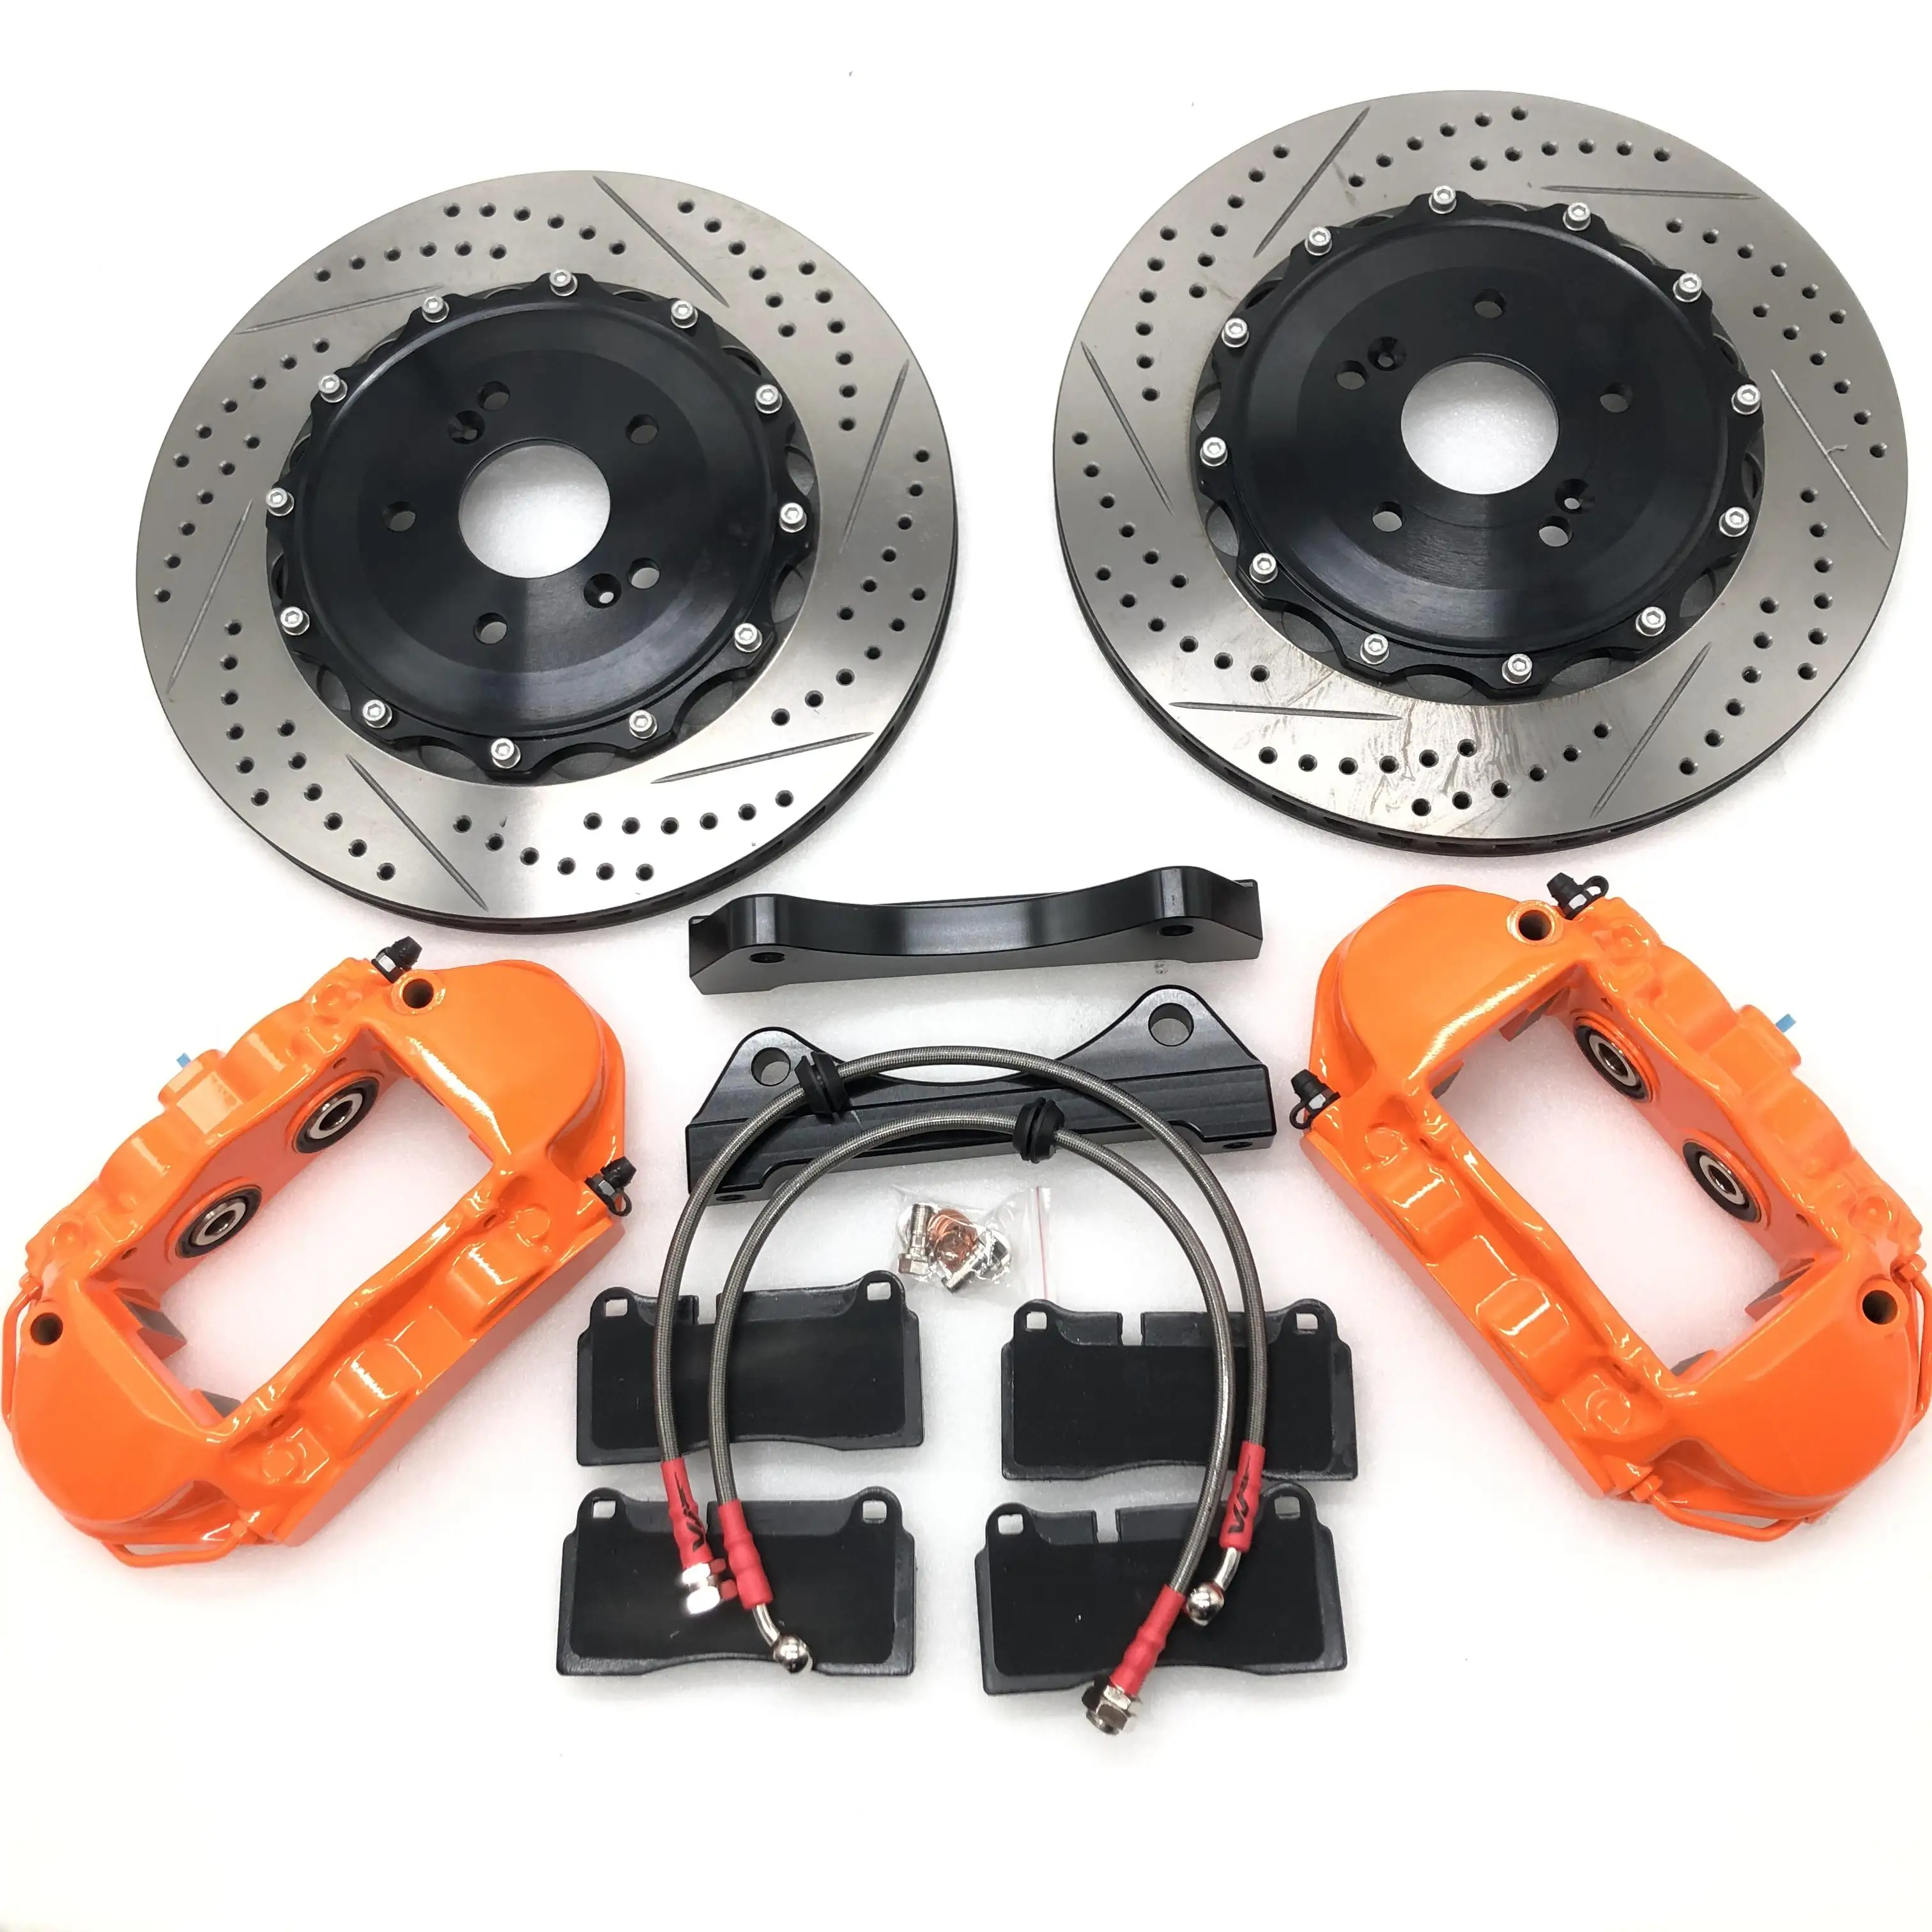 

Jekit Rear Brake System GT4 Orange Color 4 Pots Caliper 355*28mm Drilled Slot Disc Rotor For E90 E92 E91 E93 Front wheel